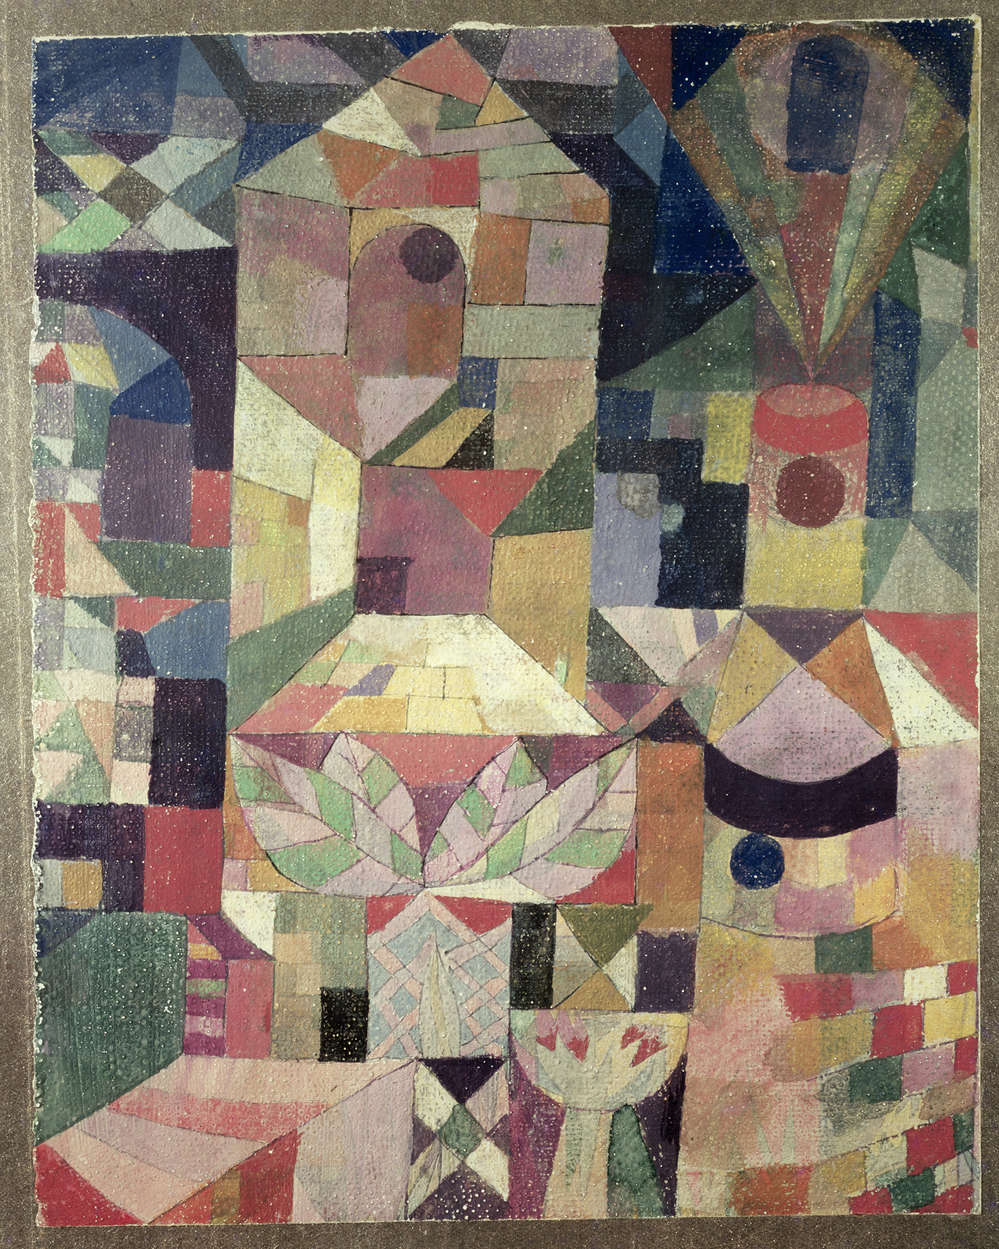             Mural "Jardín del Castillo" de Paul Klee
        